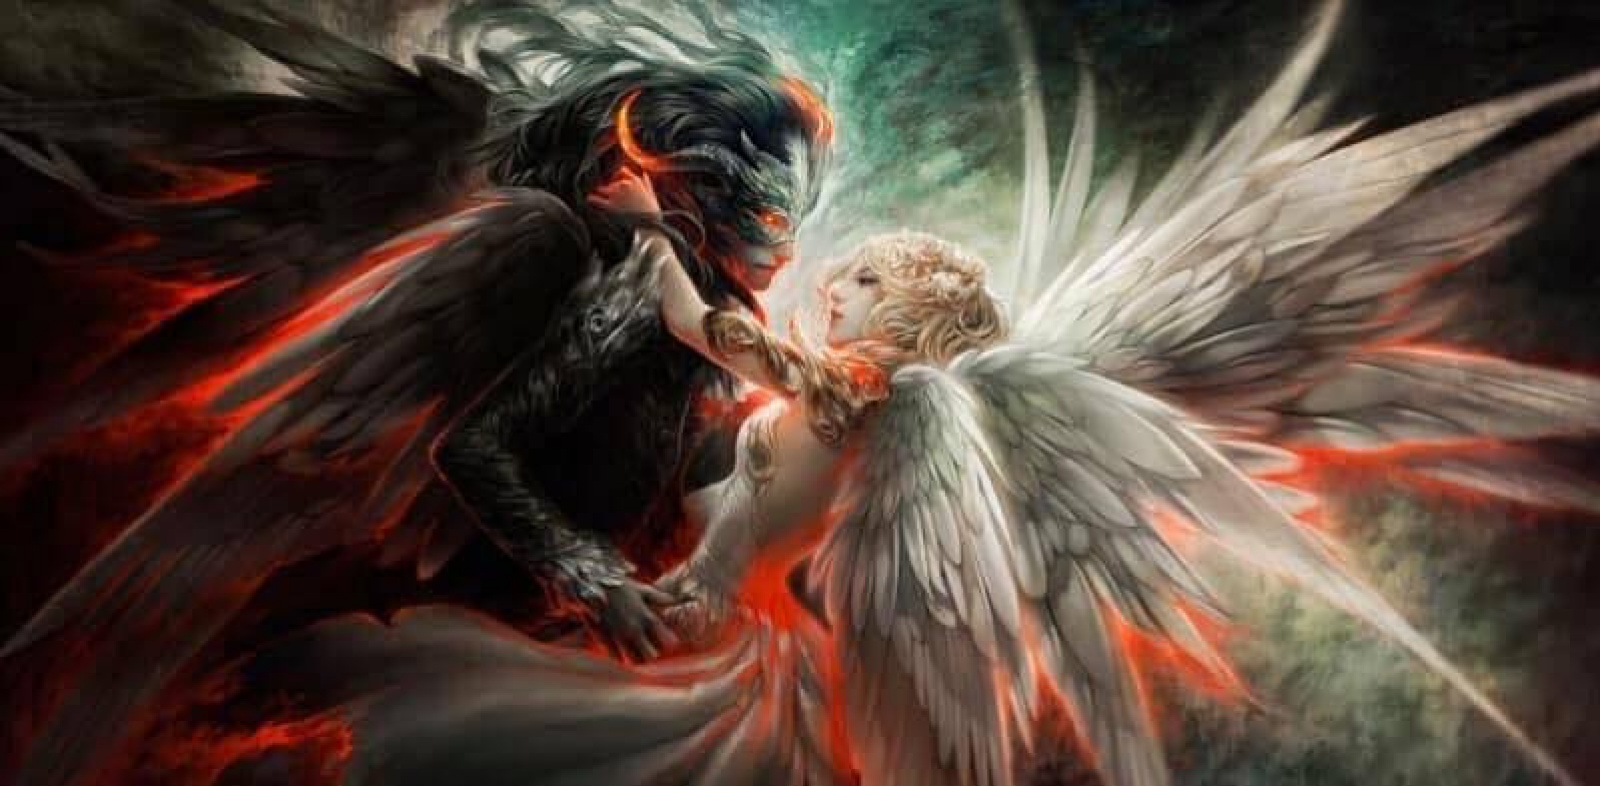 angels and demons mythology